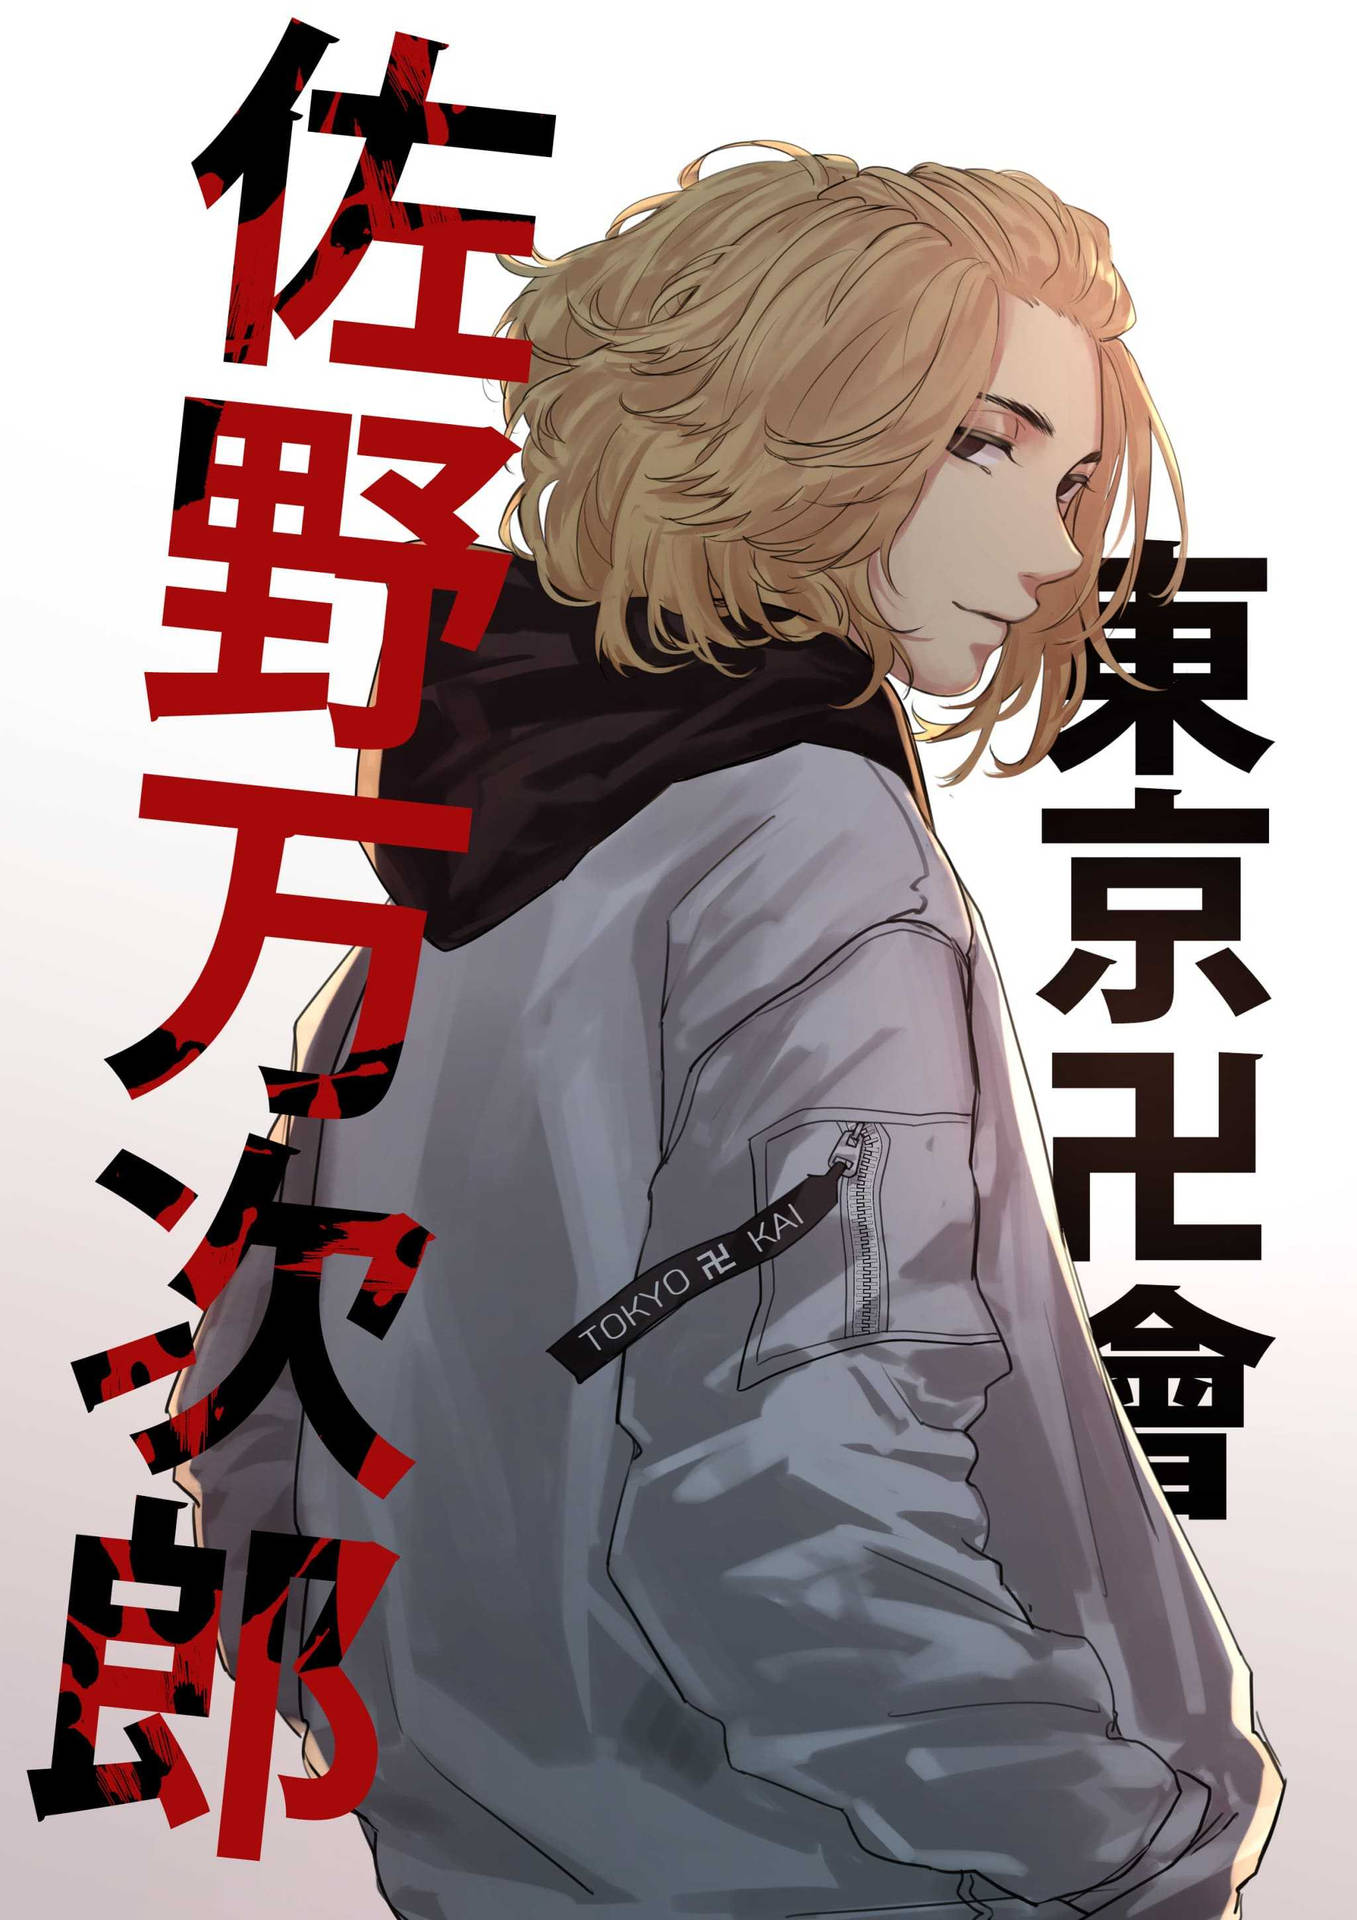 Manjirosano Anime-affisch. Wallpaper